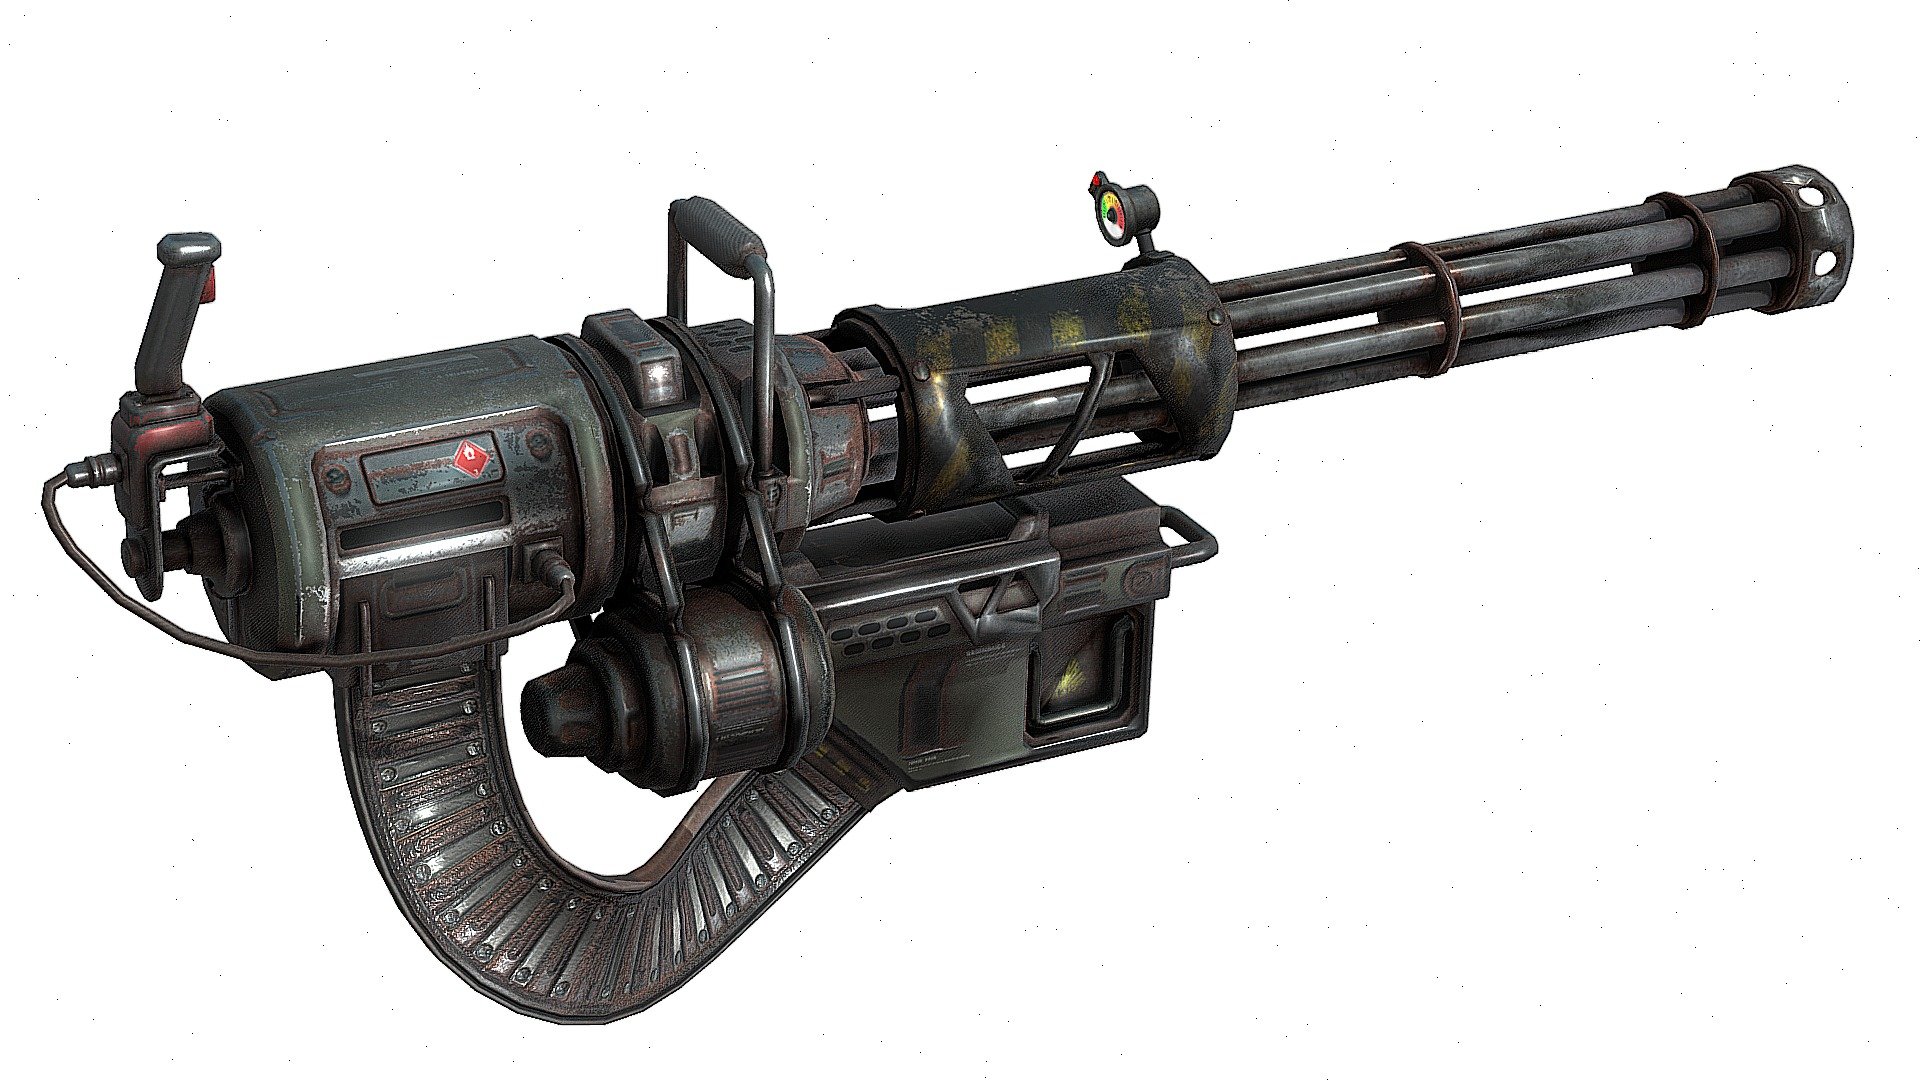 Fallout: New Vegas Dev Diary Highlights Guns + Sound